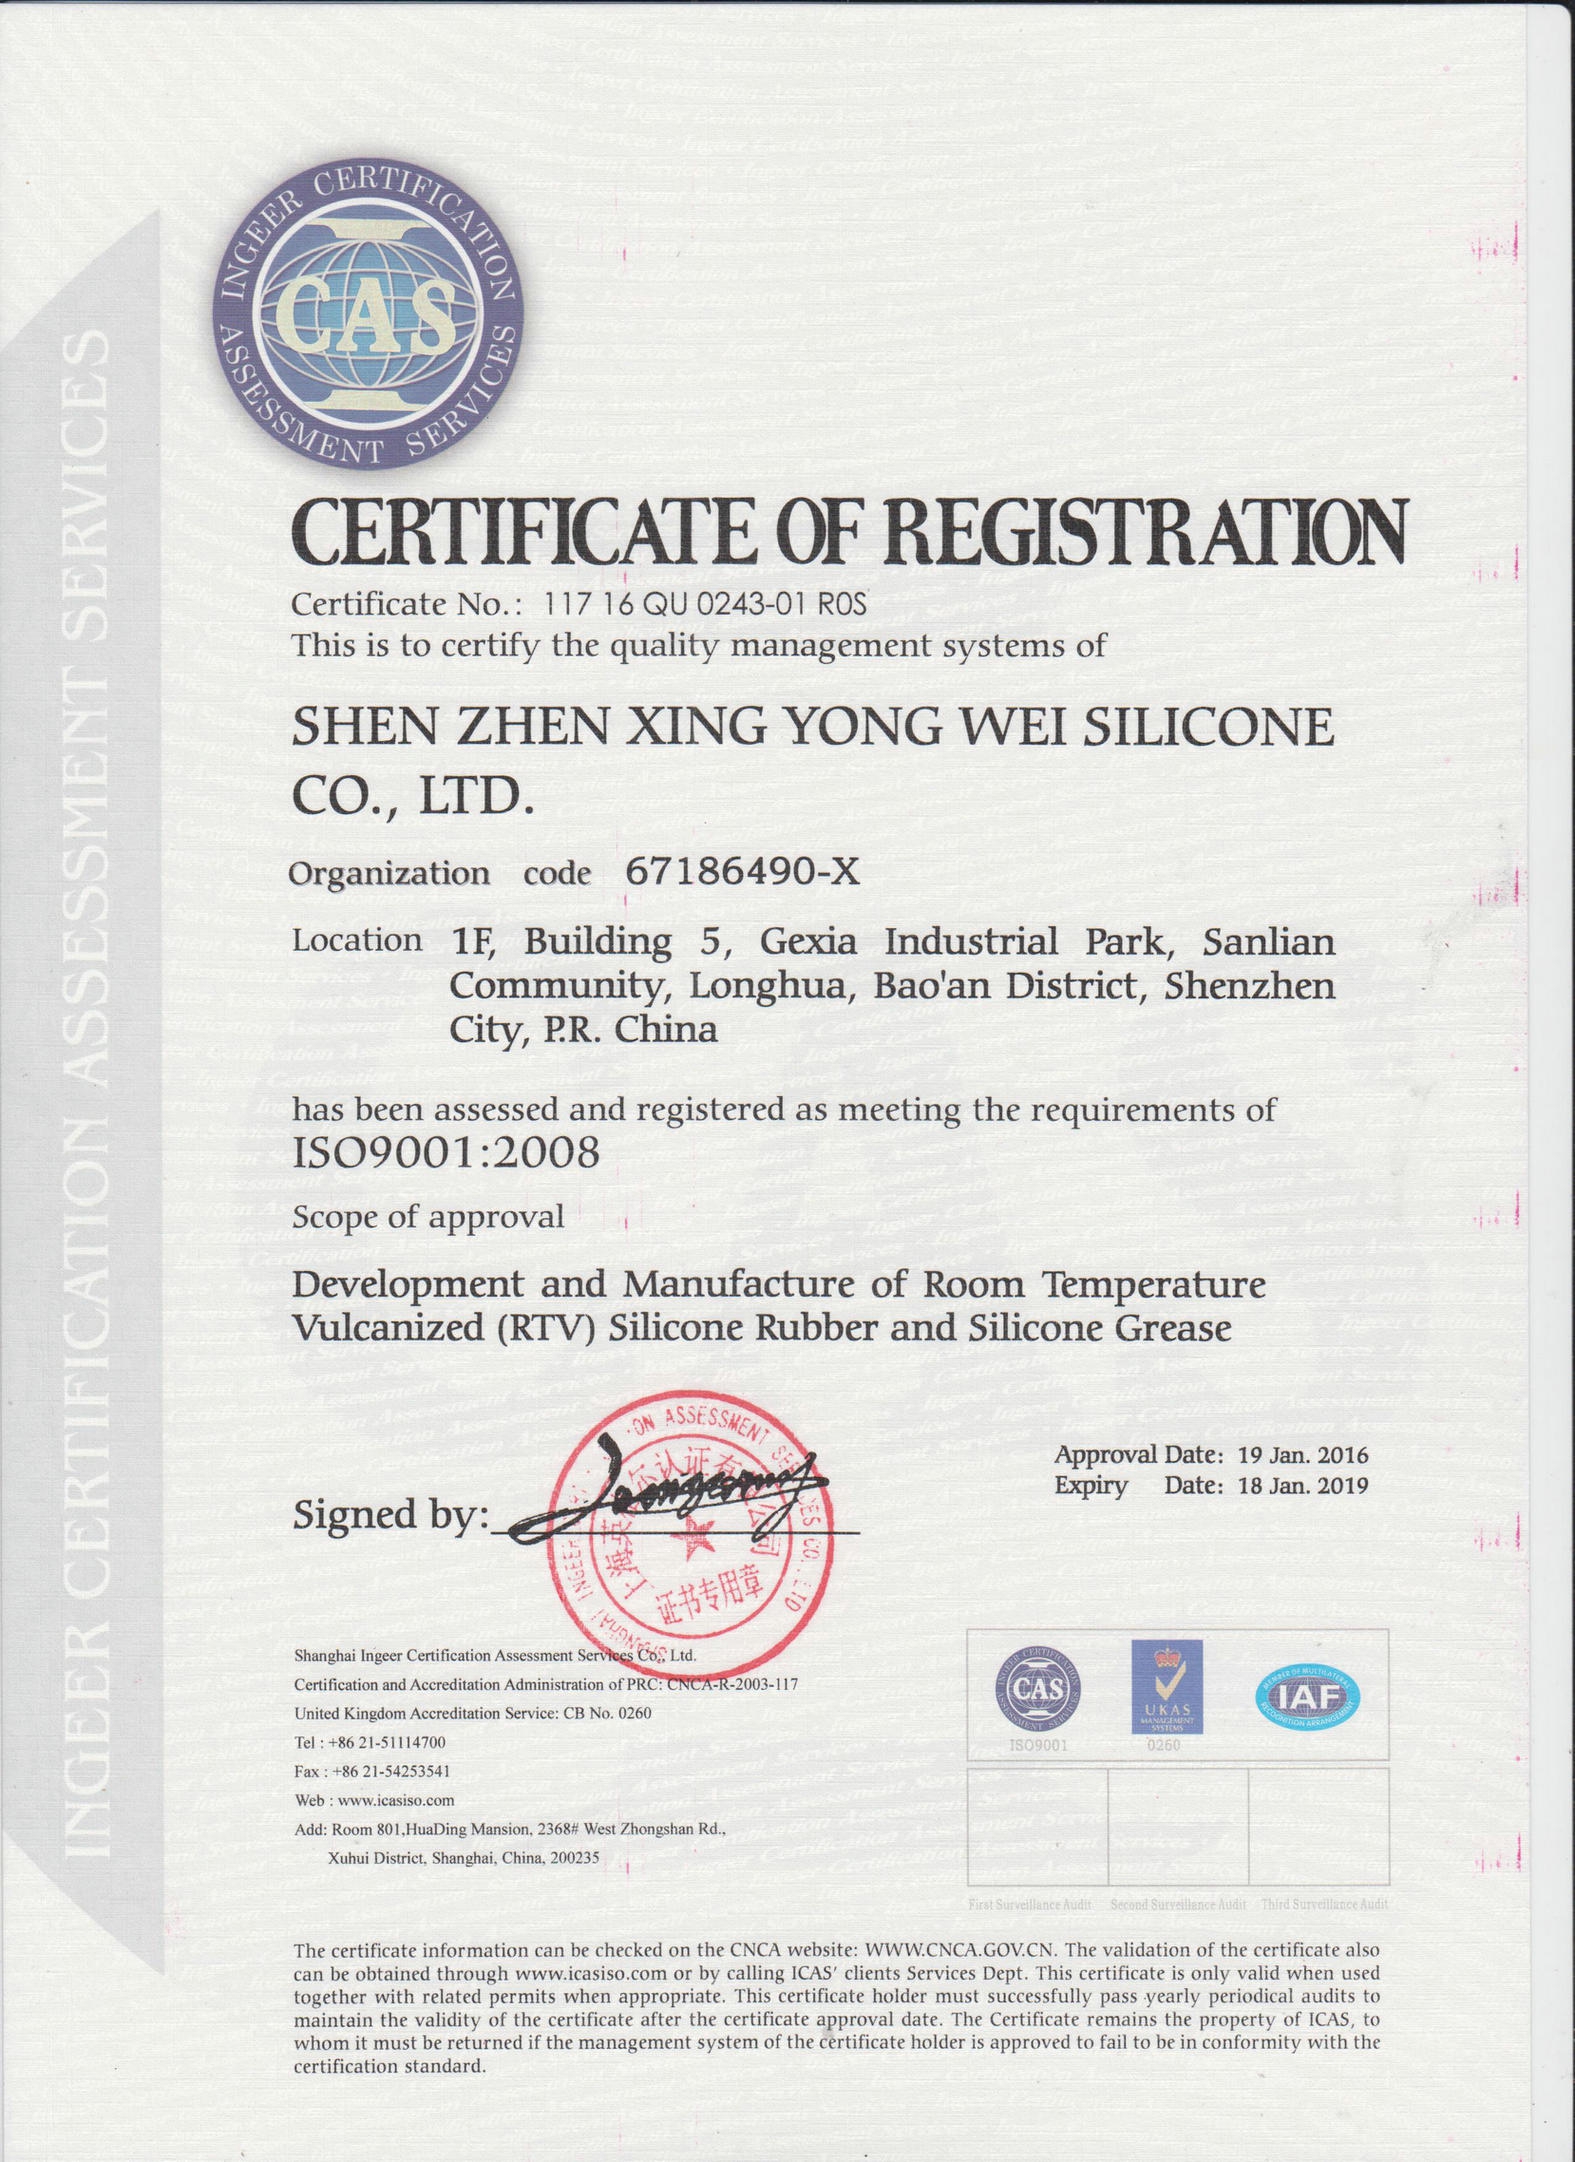 興永為硅膠 ISO 9001 2008